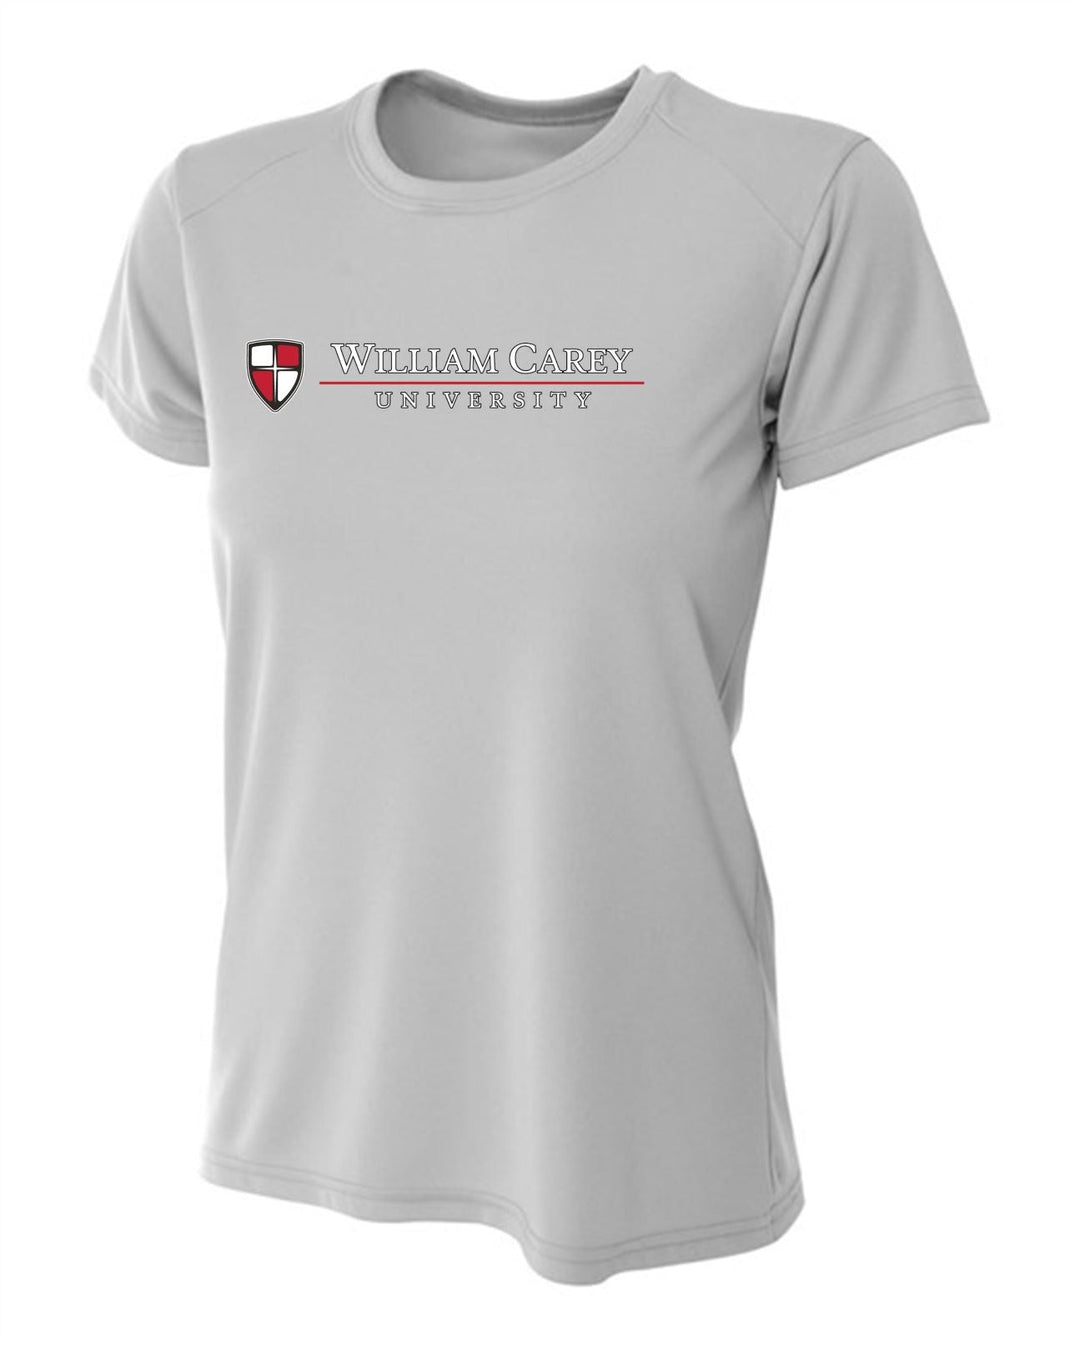 WCU School Of Business Women's Short-Sleeve Performance Shirt WCU Business Silver Grey Womens Small - Third Coast Soccer